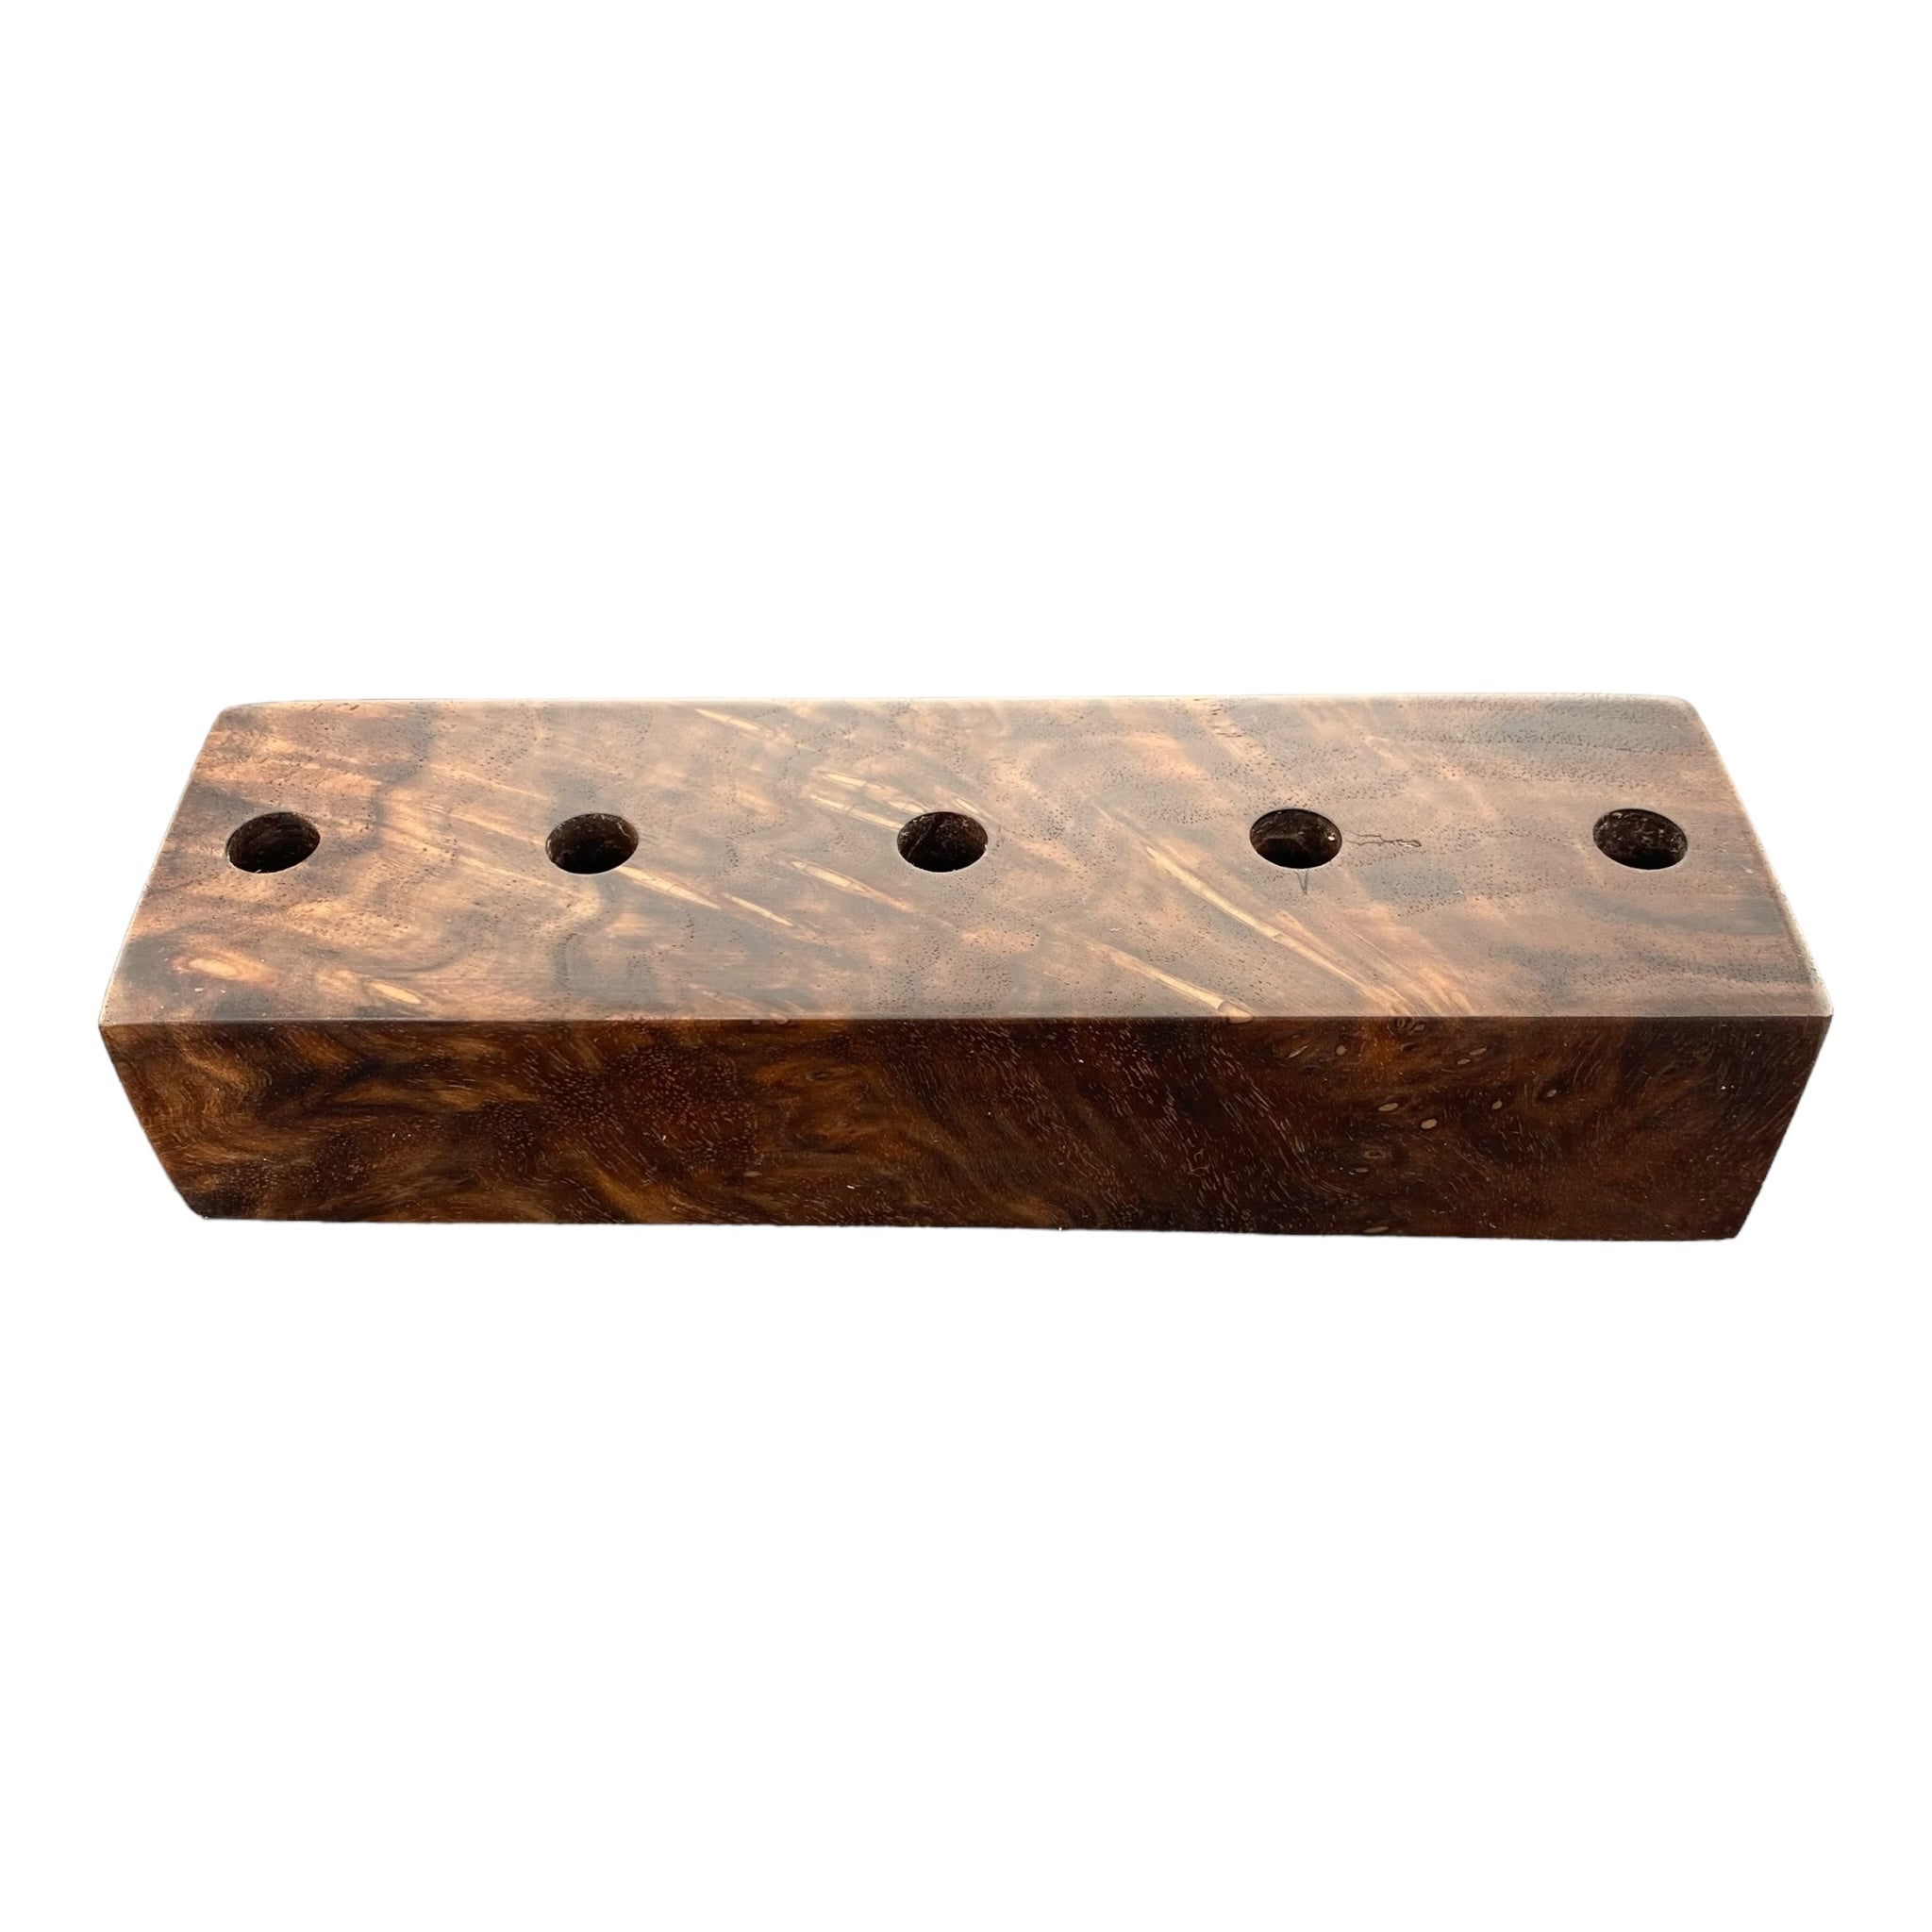 5 Hole Wood Display Stand Holder For 10mm Bong Bowl Pieces Or Quartz Bangers - Black Walnut Burl